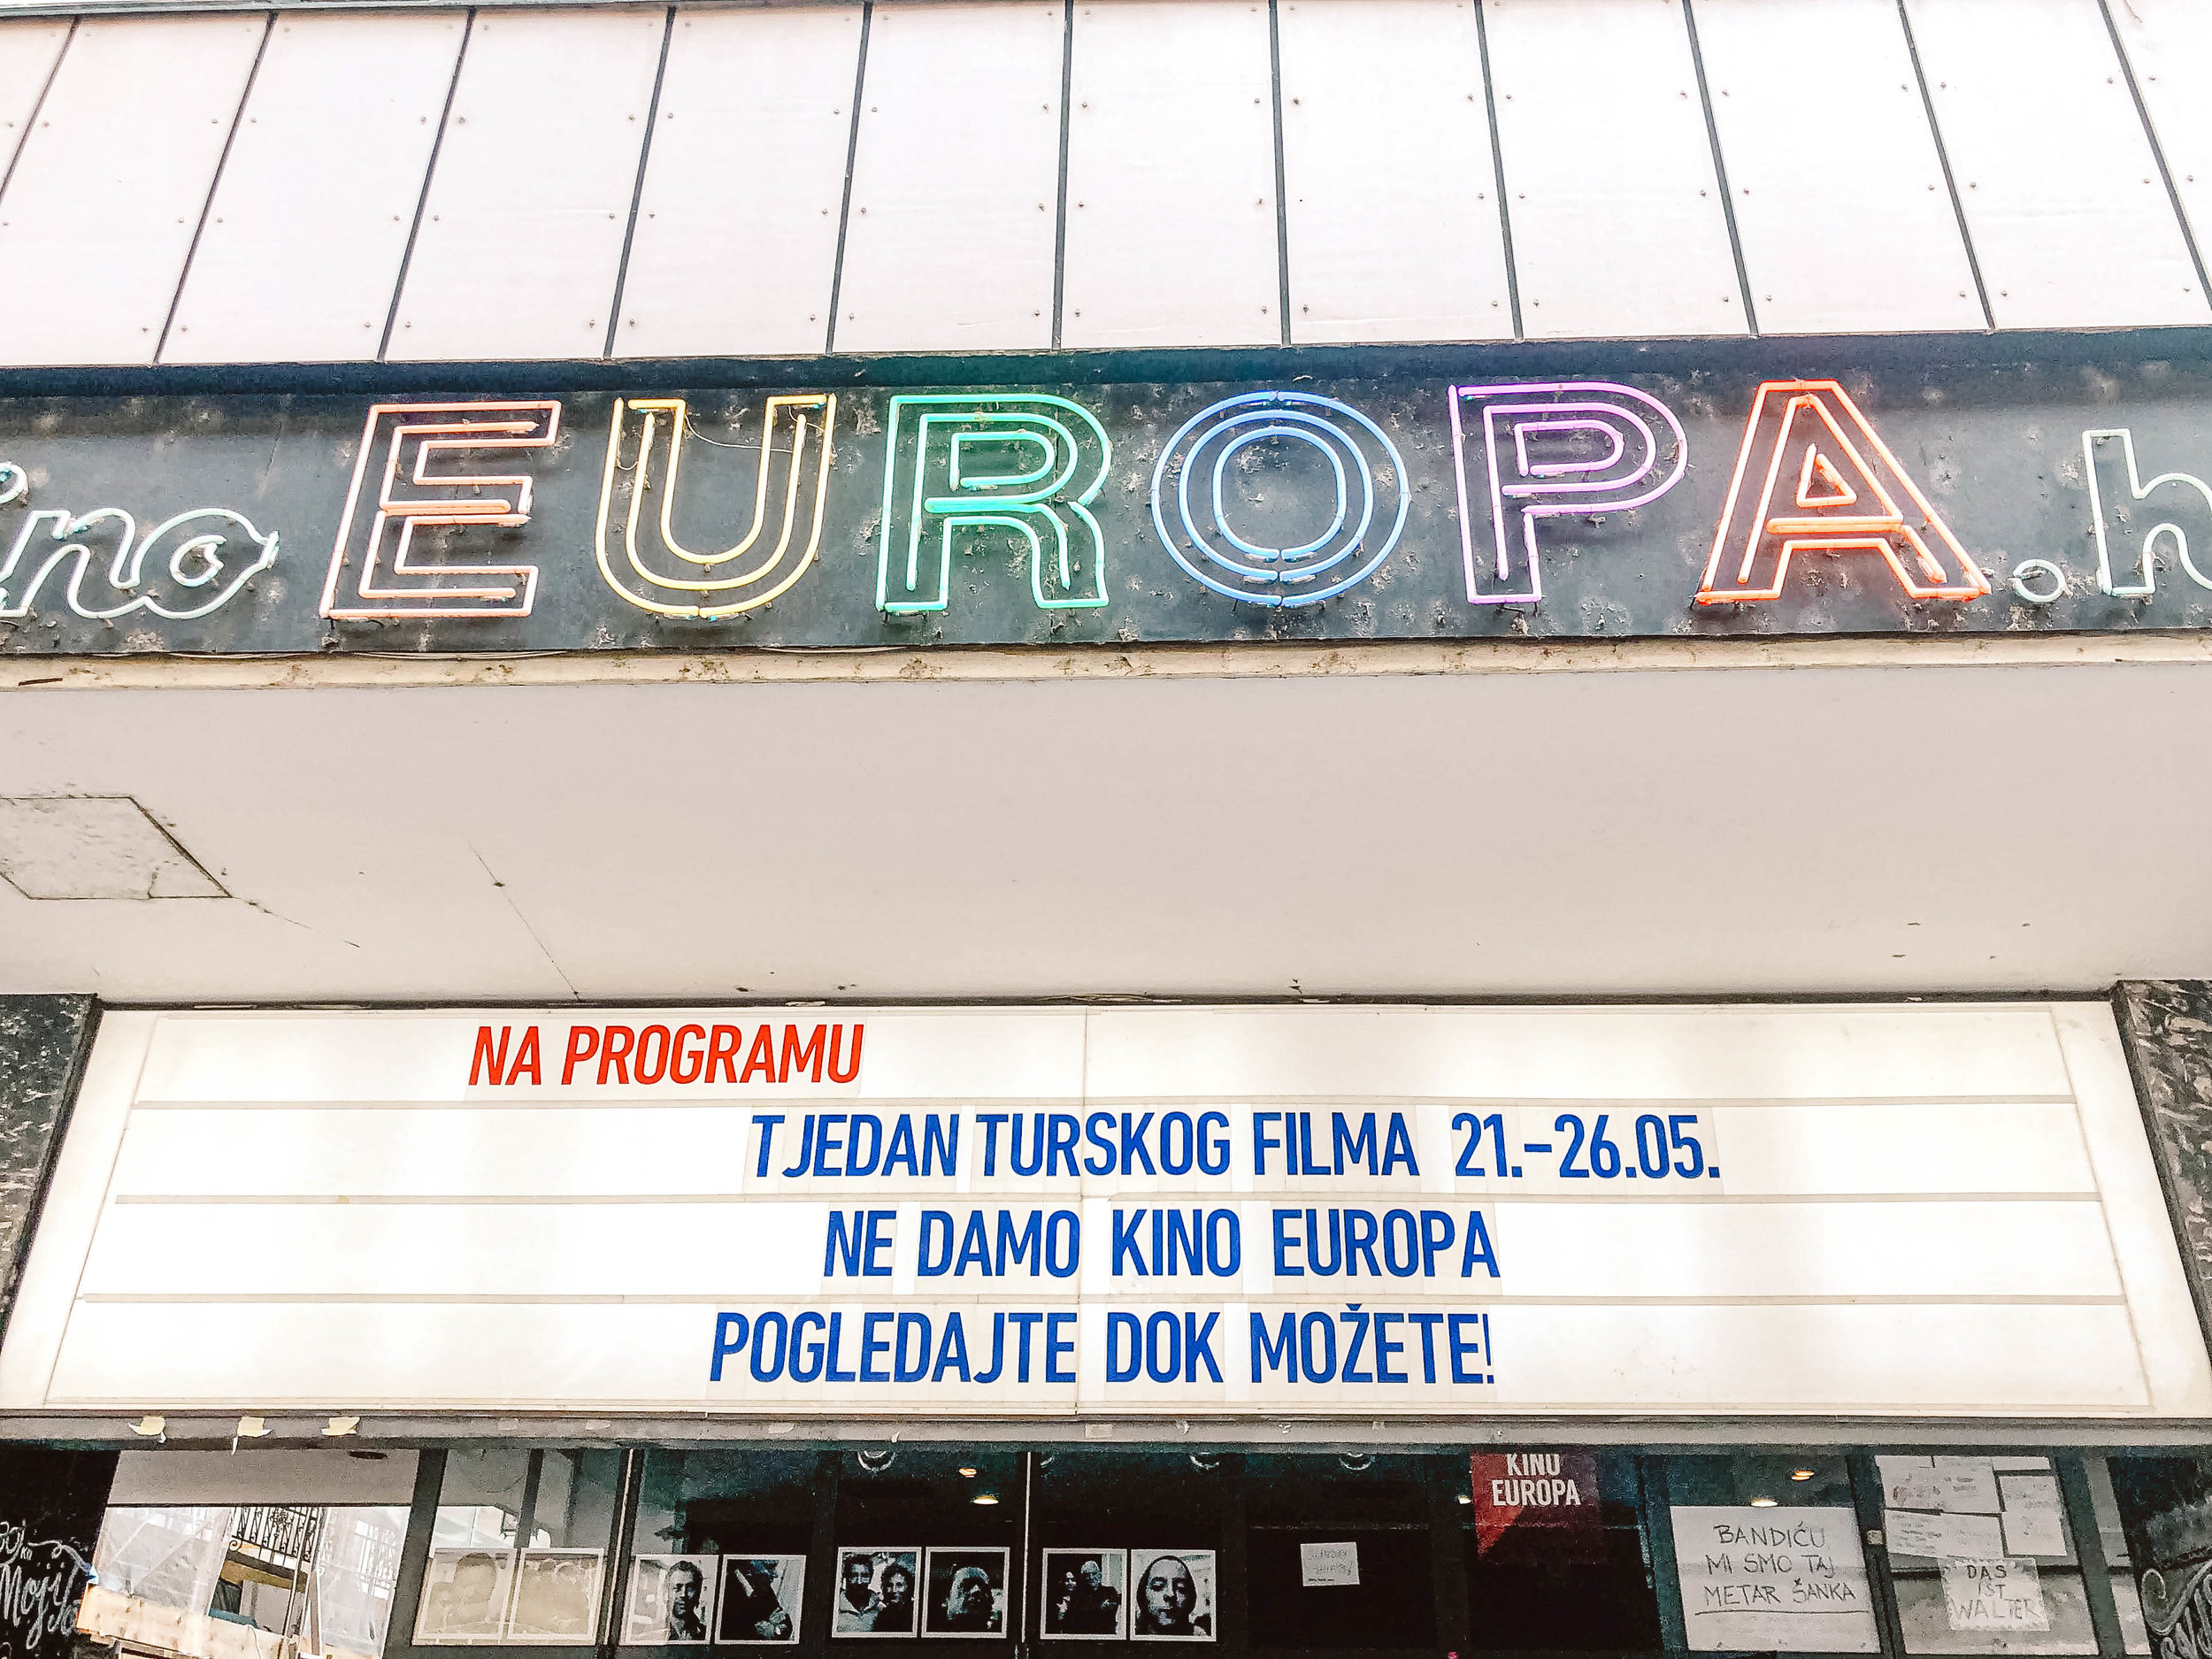 Zagreb Kino Europa.jpg